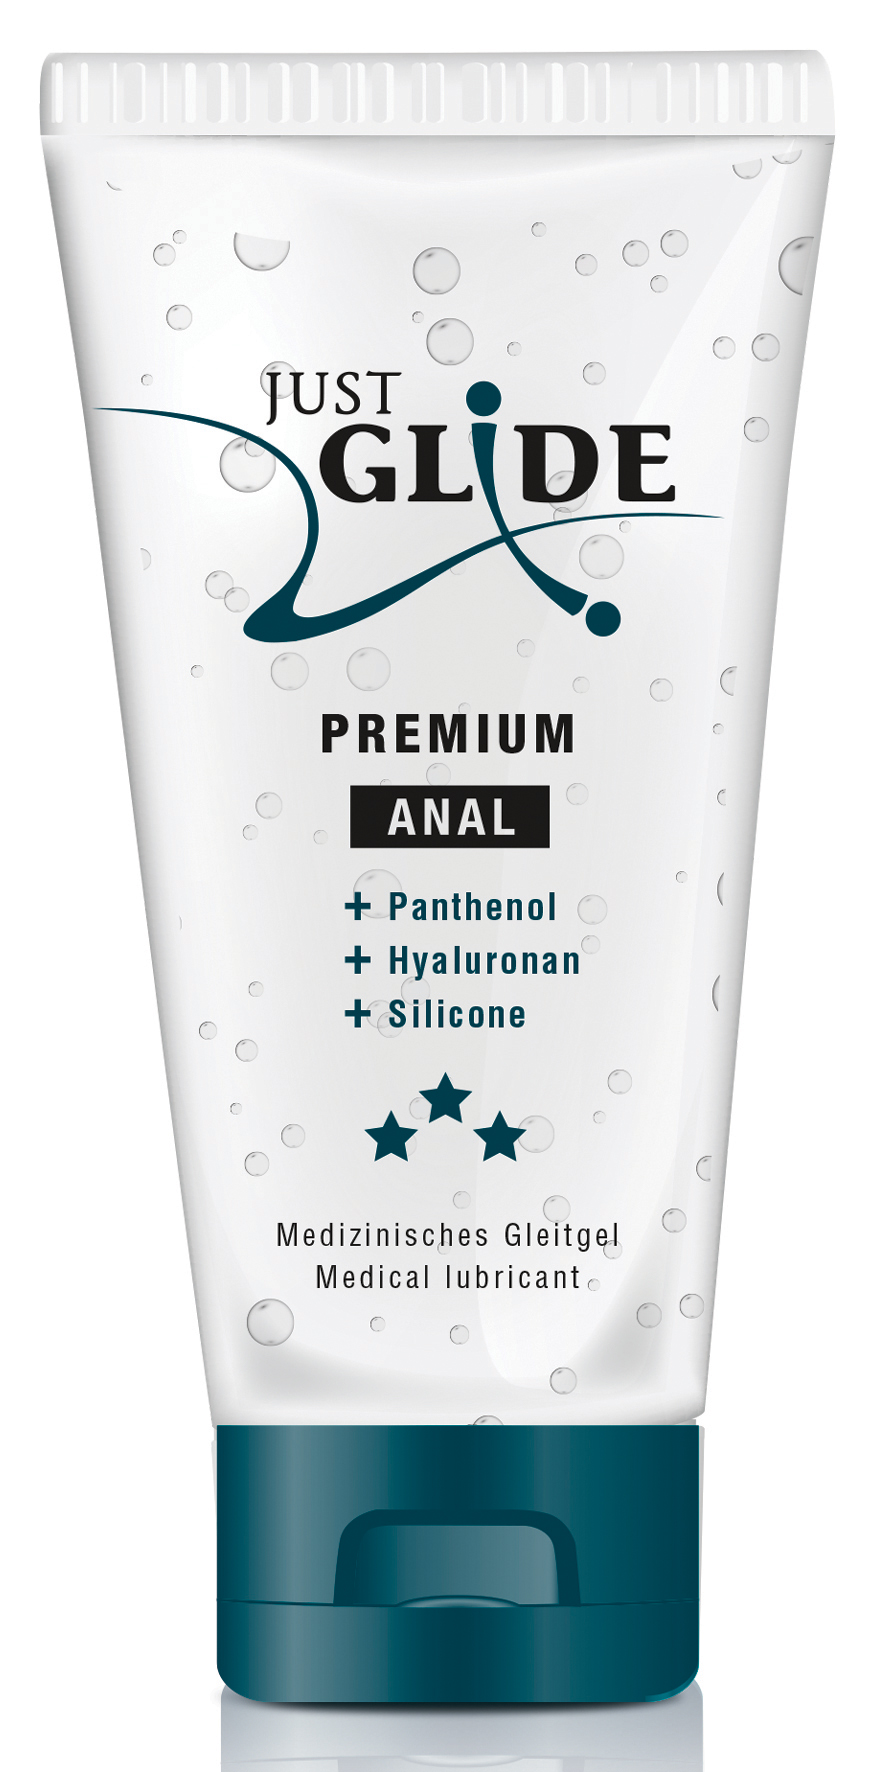 Just Glide Premium | | 200ml 300000091050 Anal 200ml